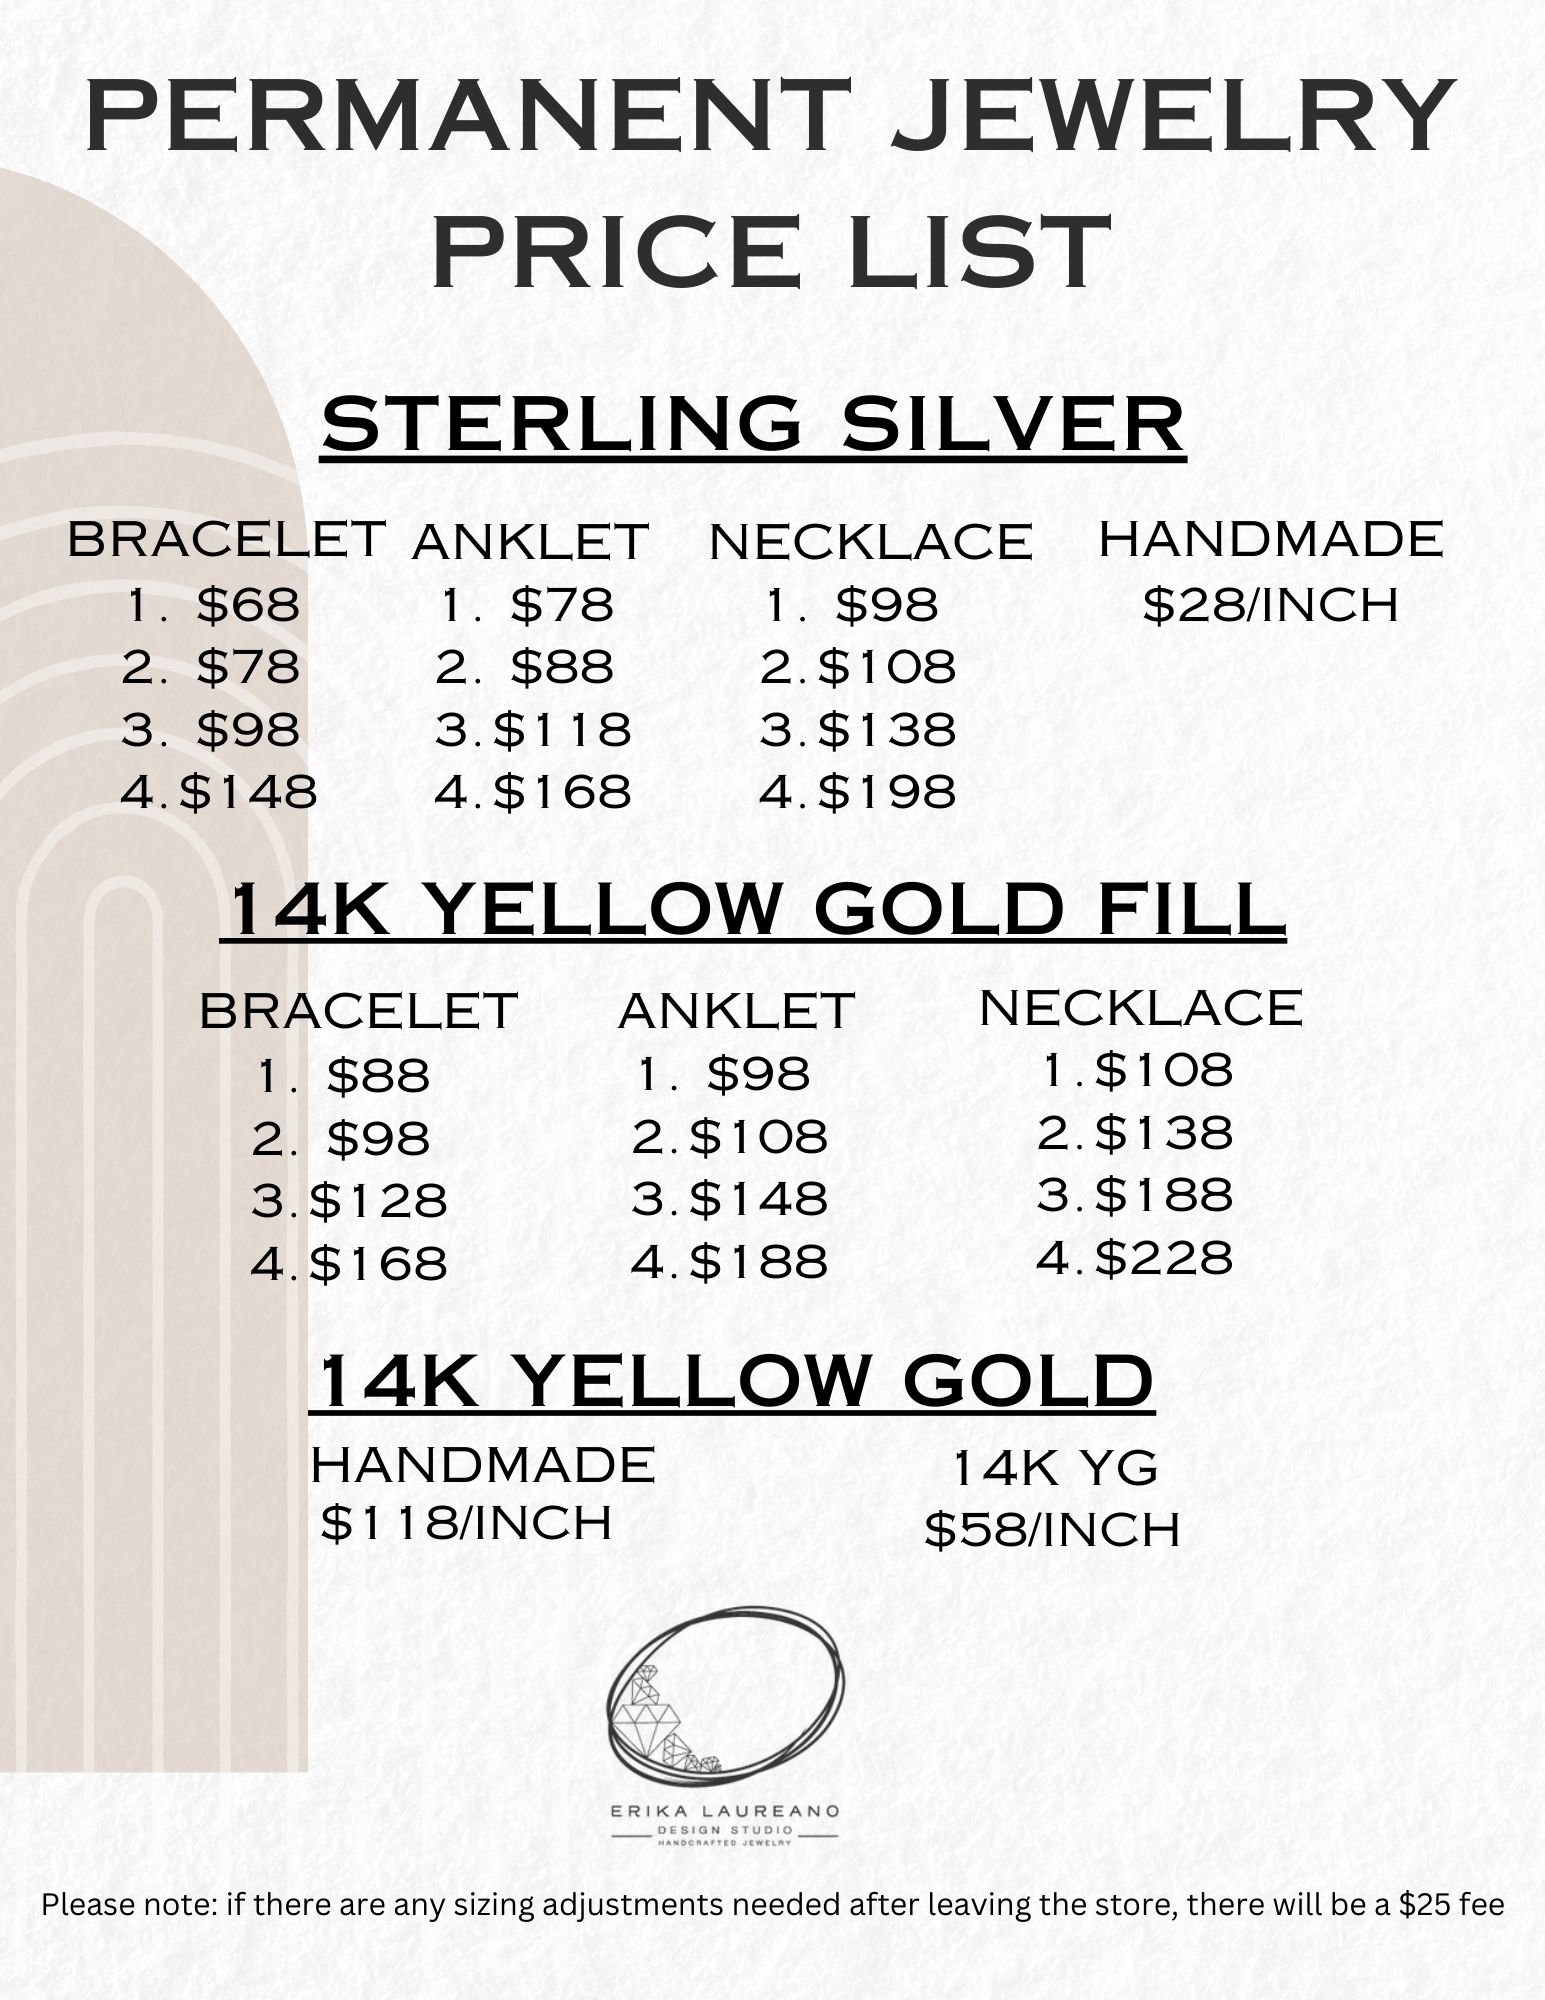 Permanent Jewelry Price List.jpg